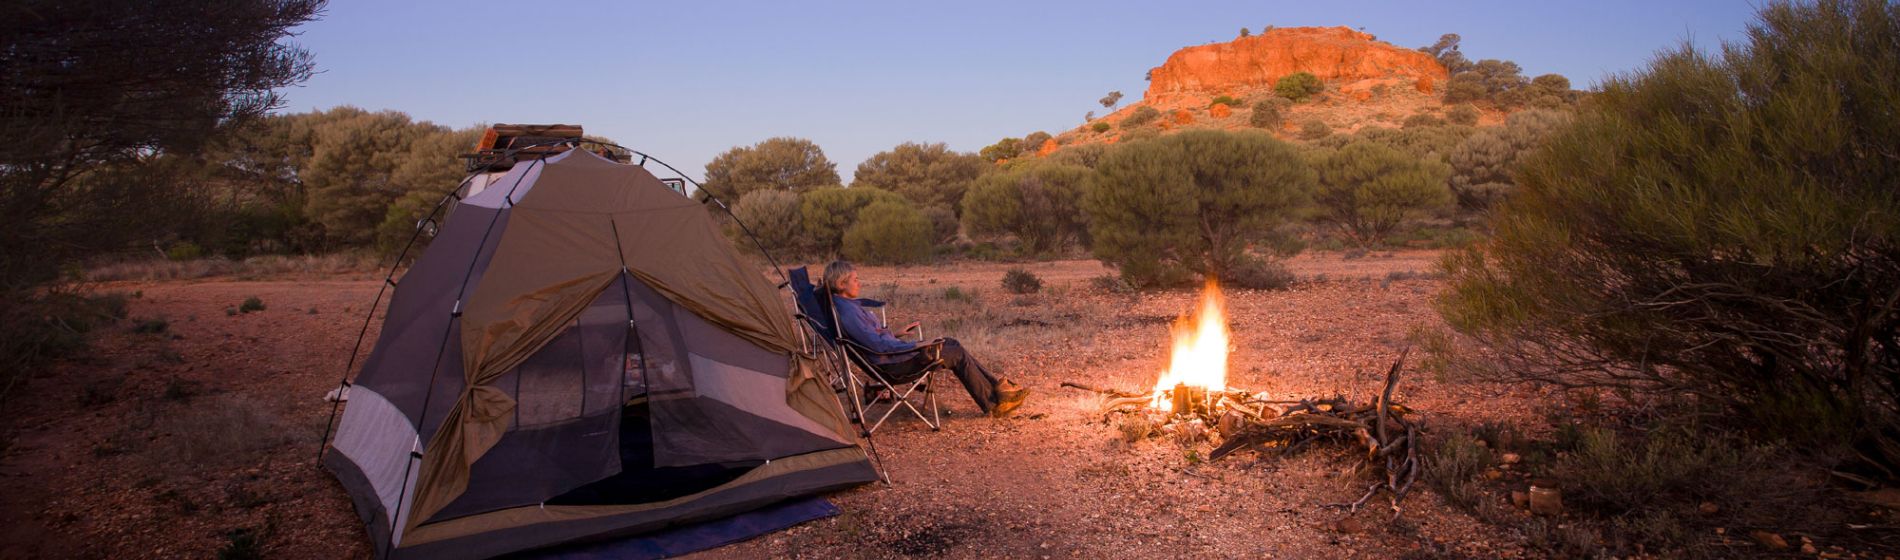 wa_camping_in_outback.jpg